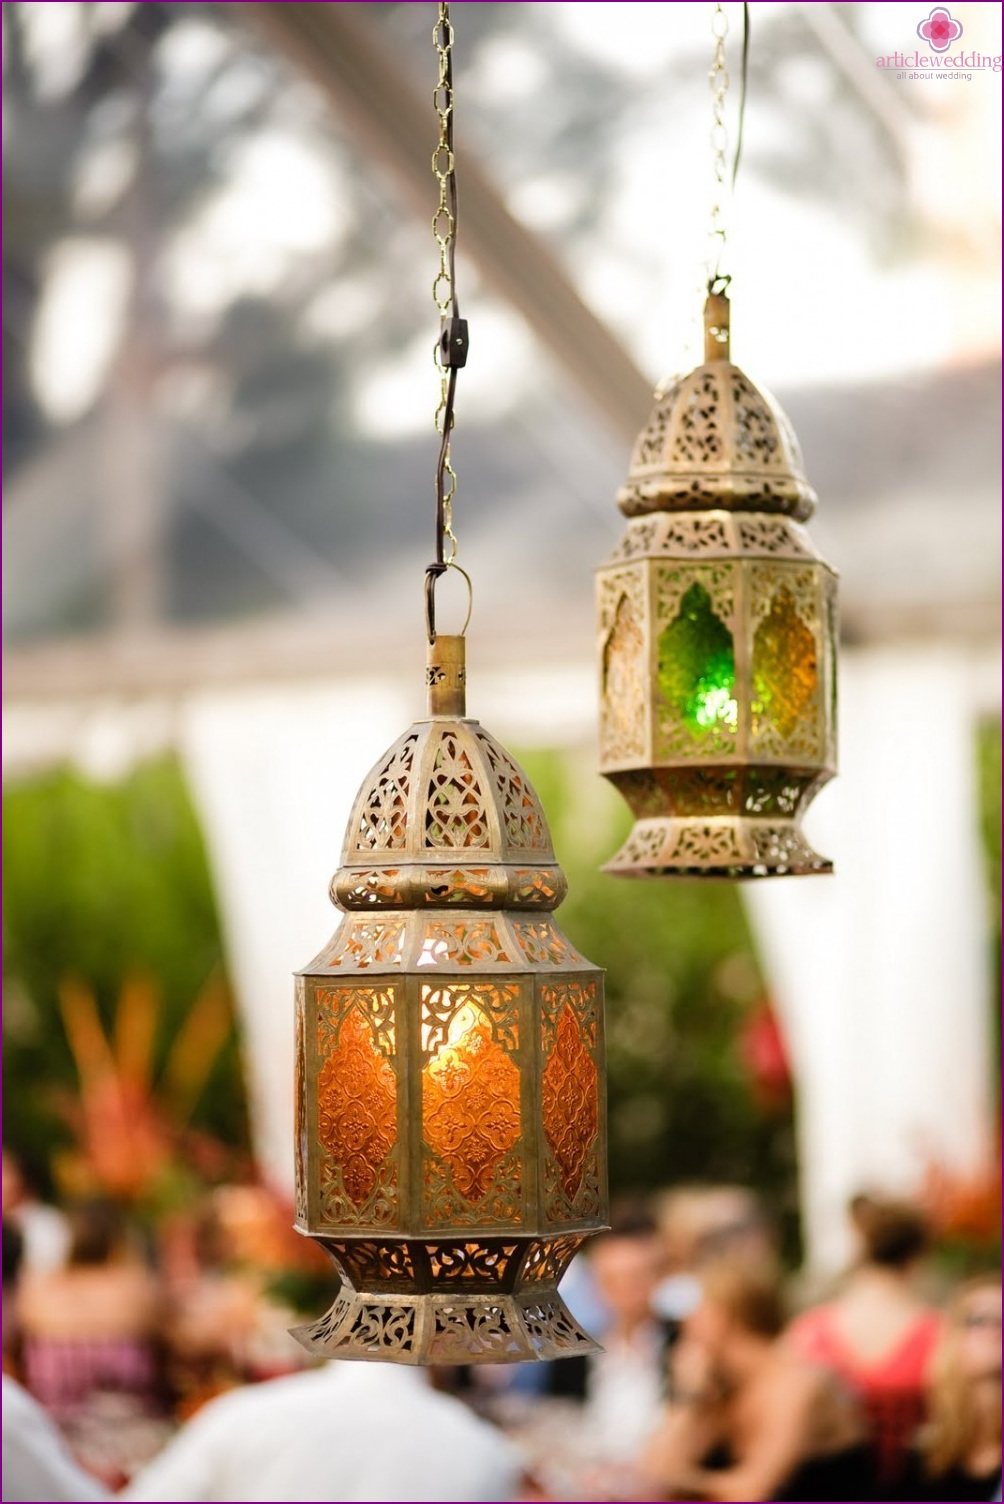 Original lamps for wedding lighting